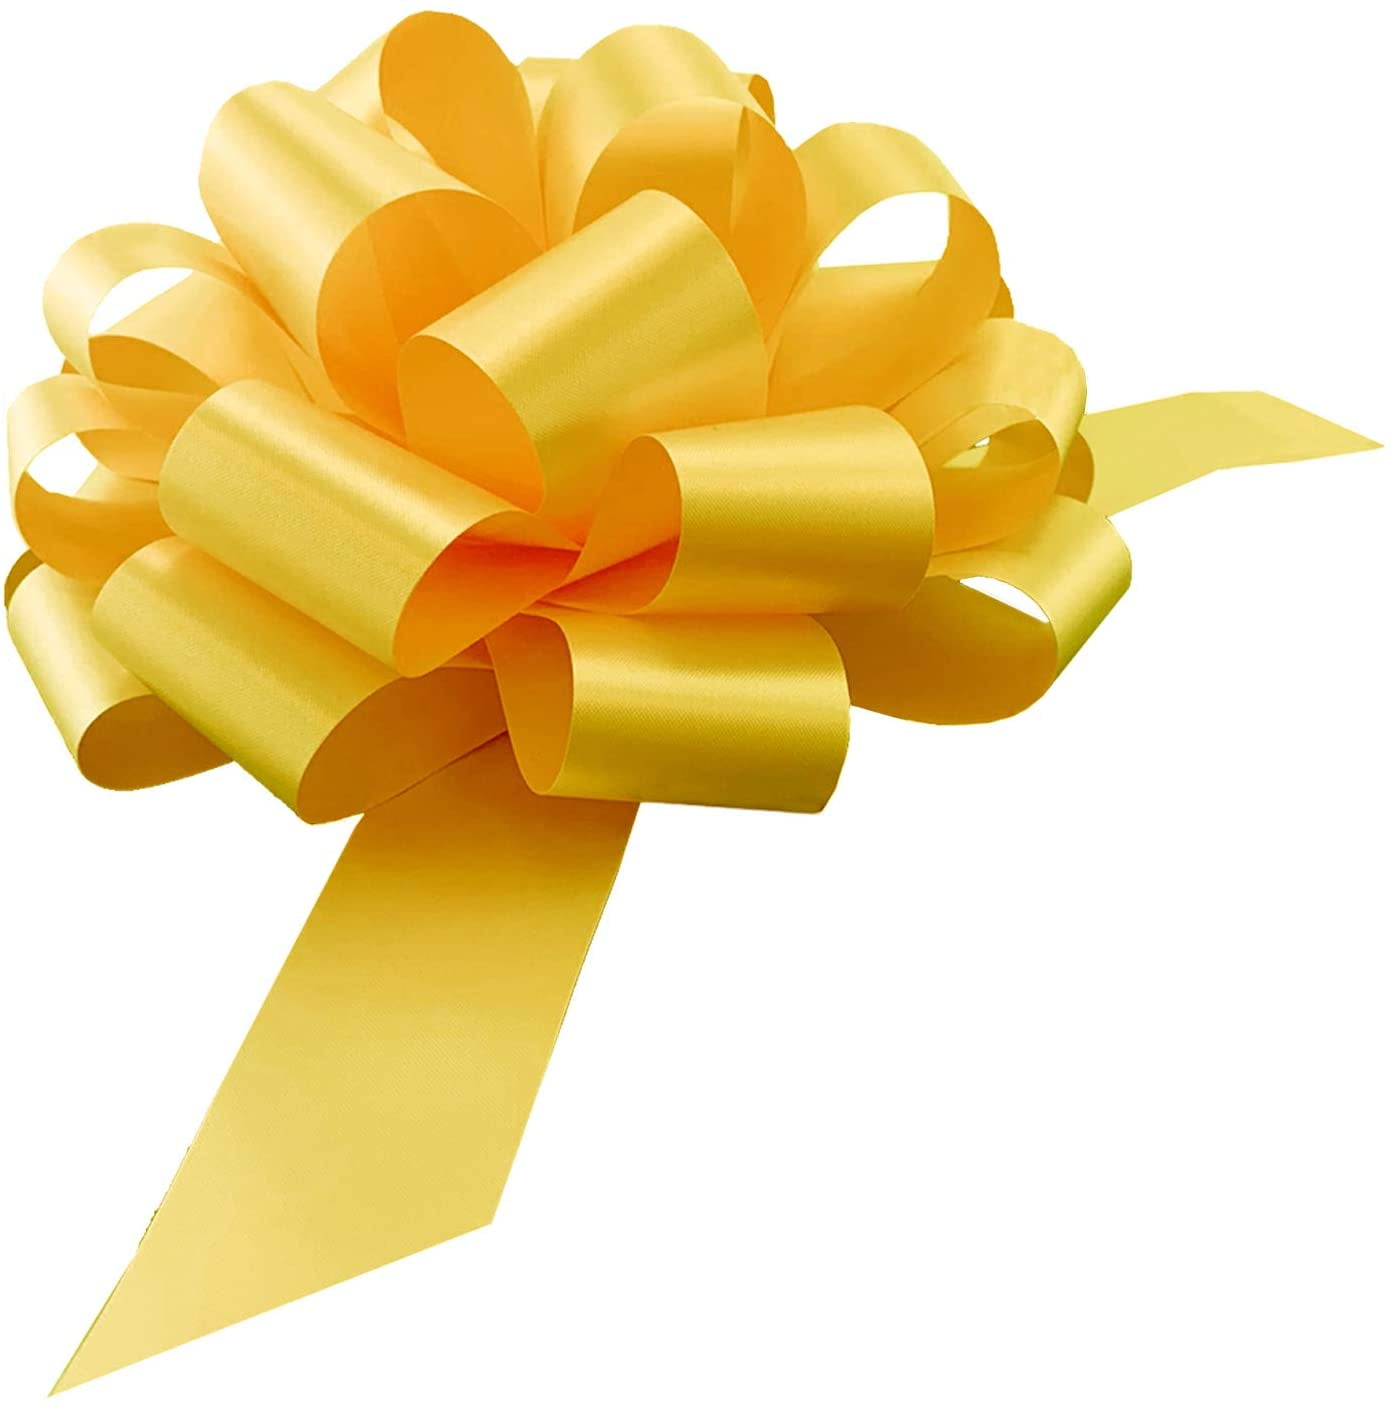 10 x 30mm Orange Pull Bow Ribbon Ideal Wedding Gift Wrap Florist Hampers Baskets 